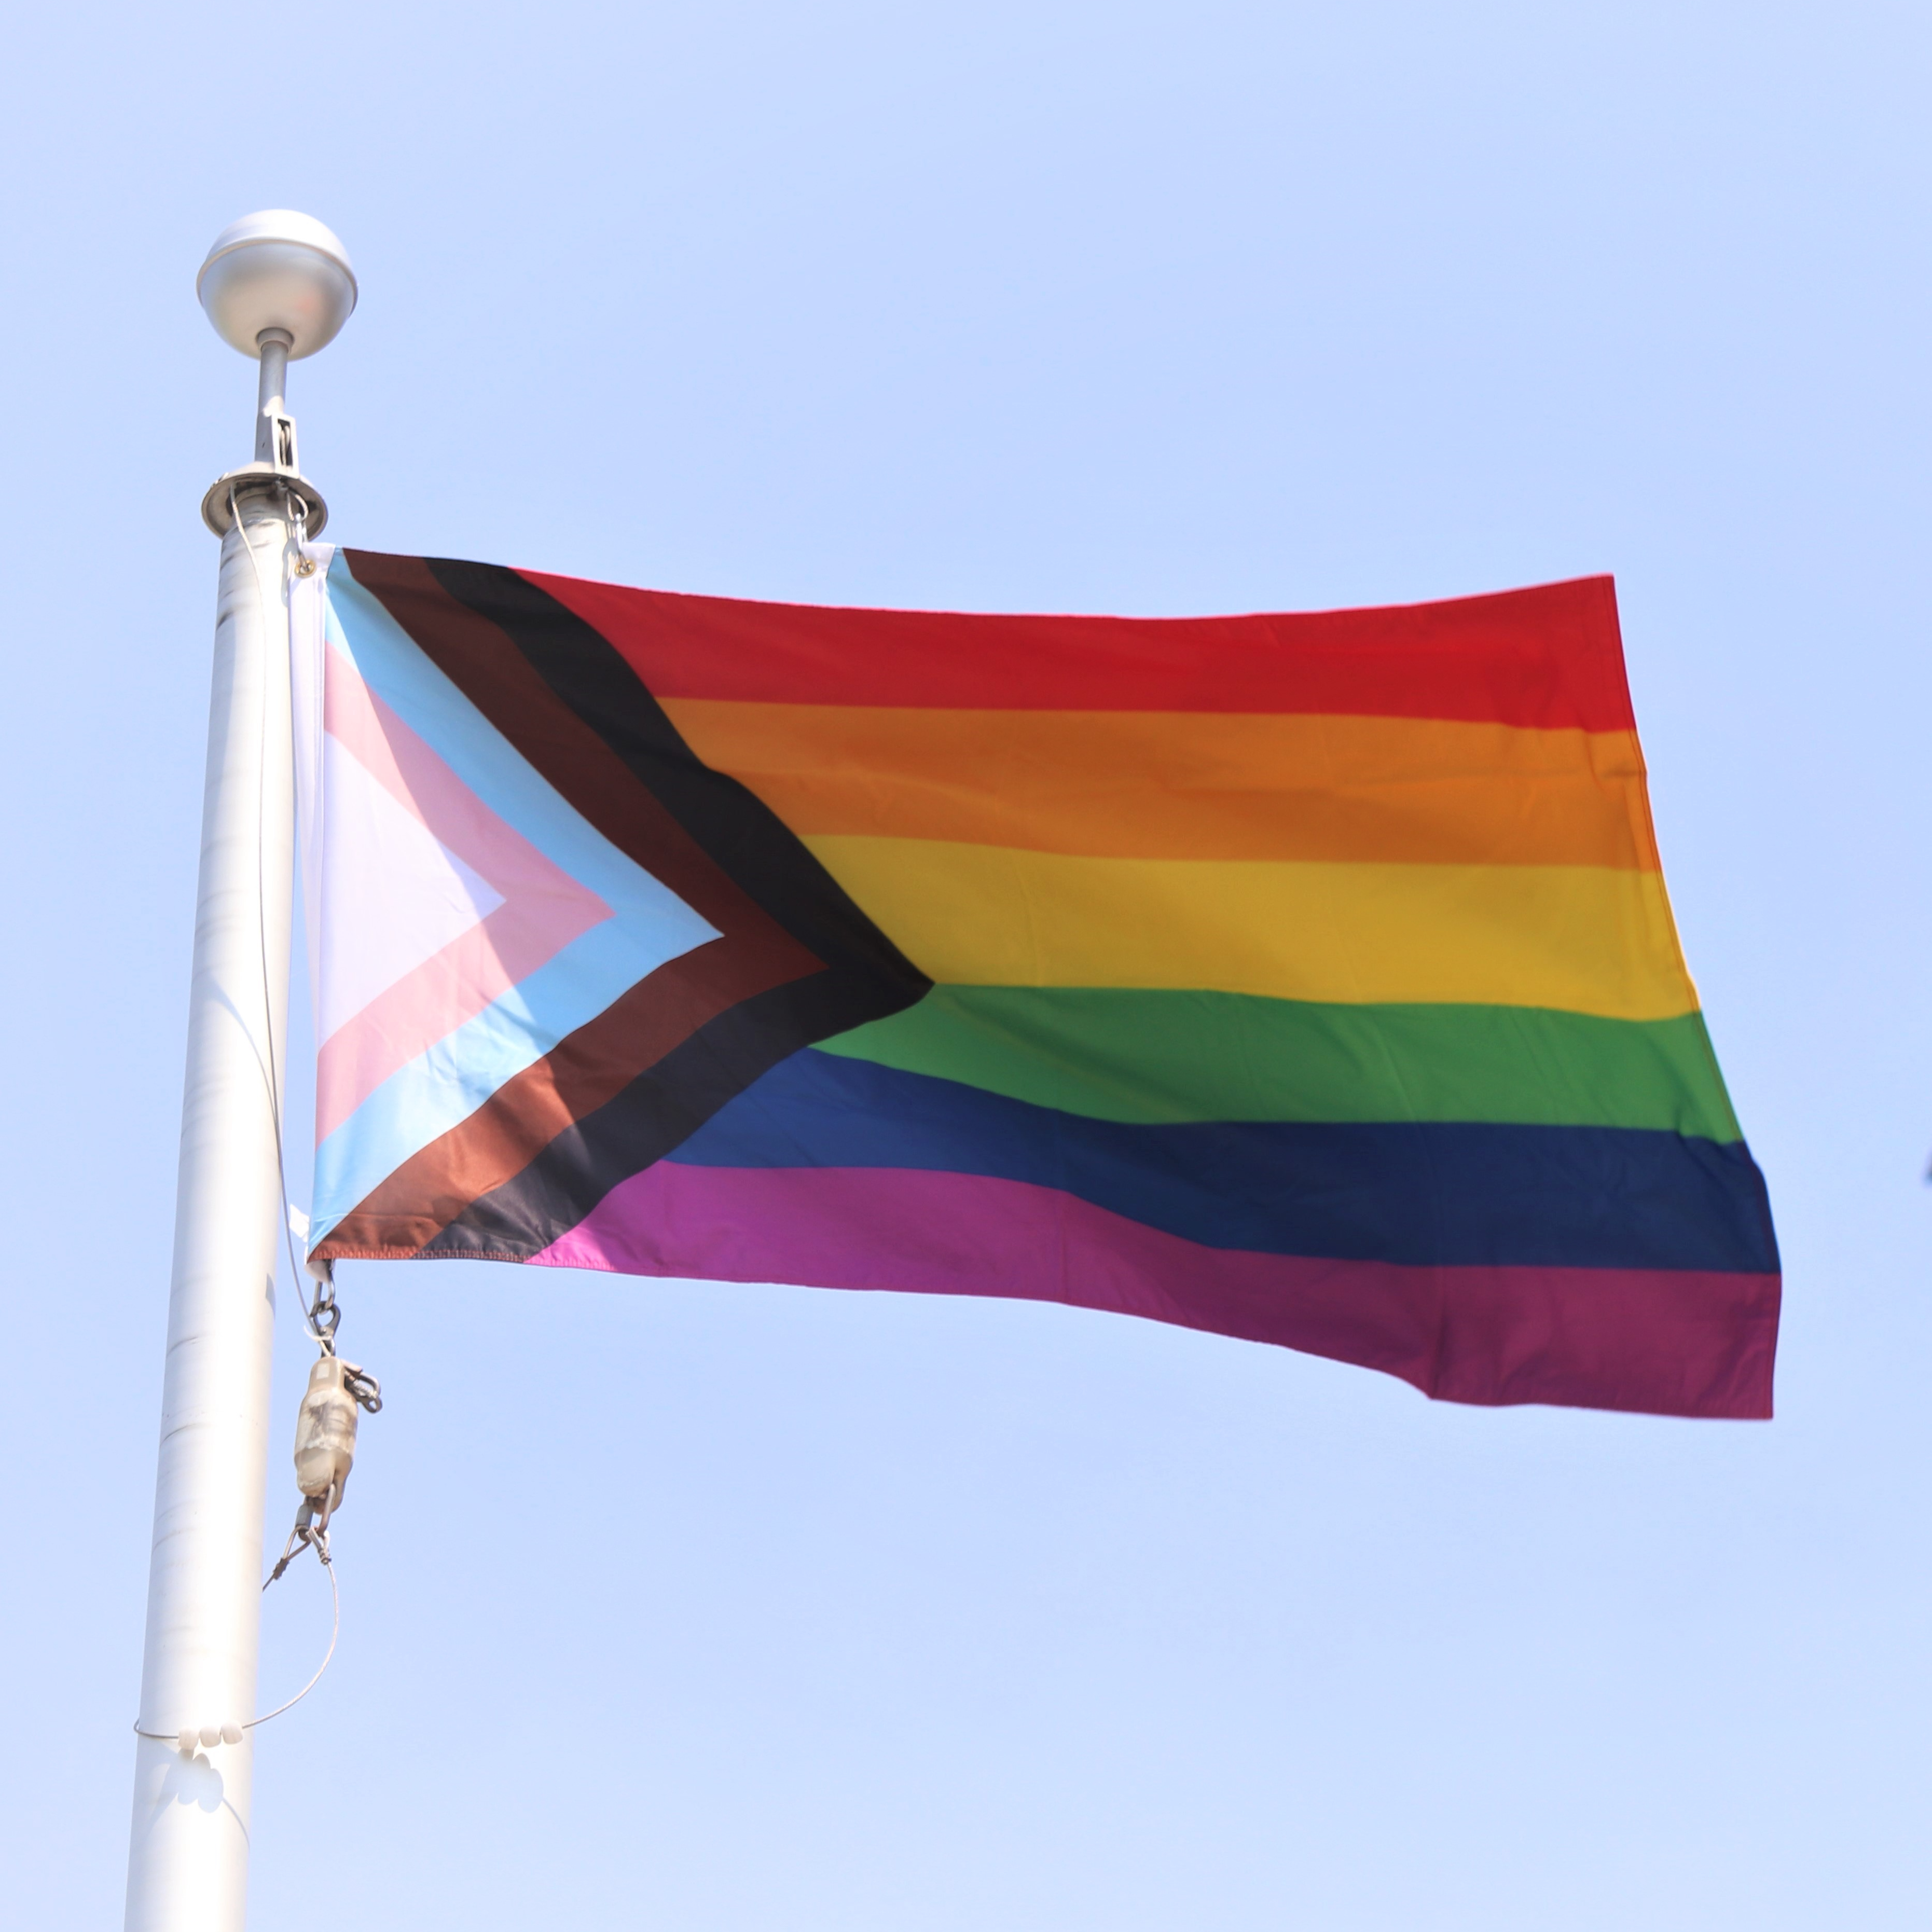 Progress Pride flag raising event 